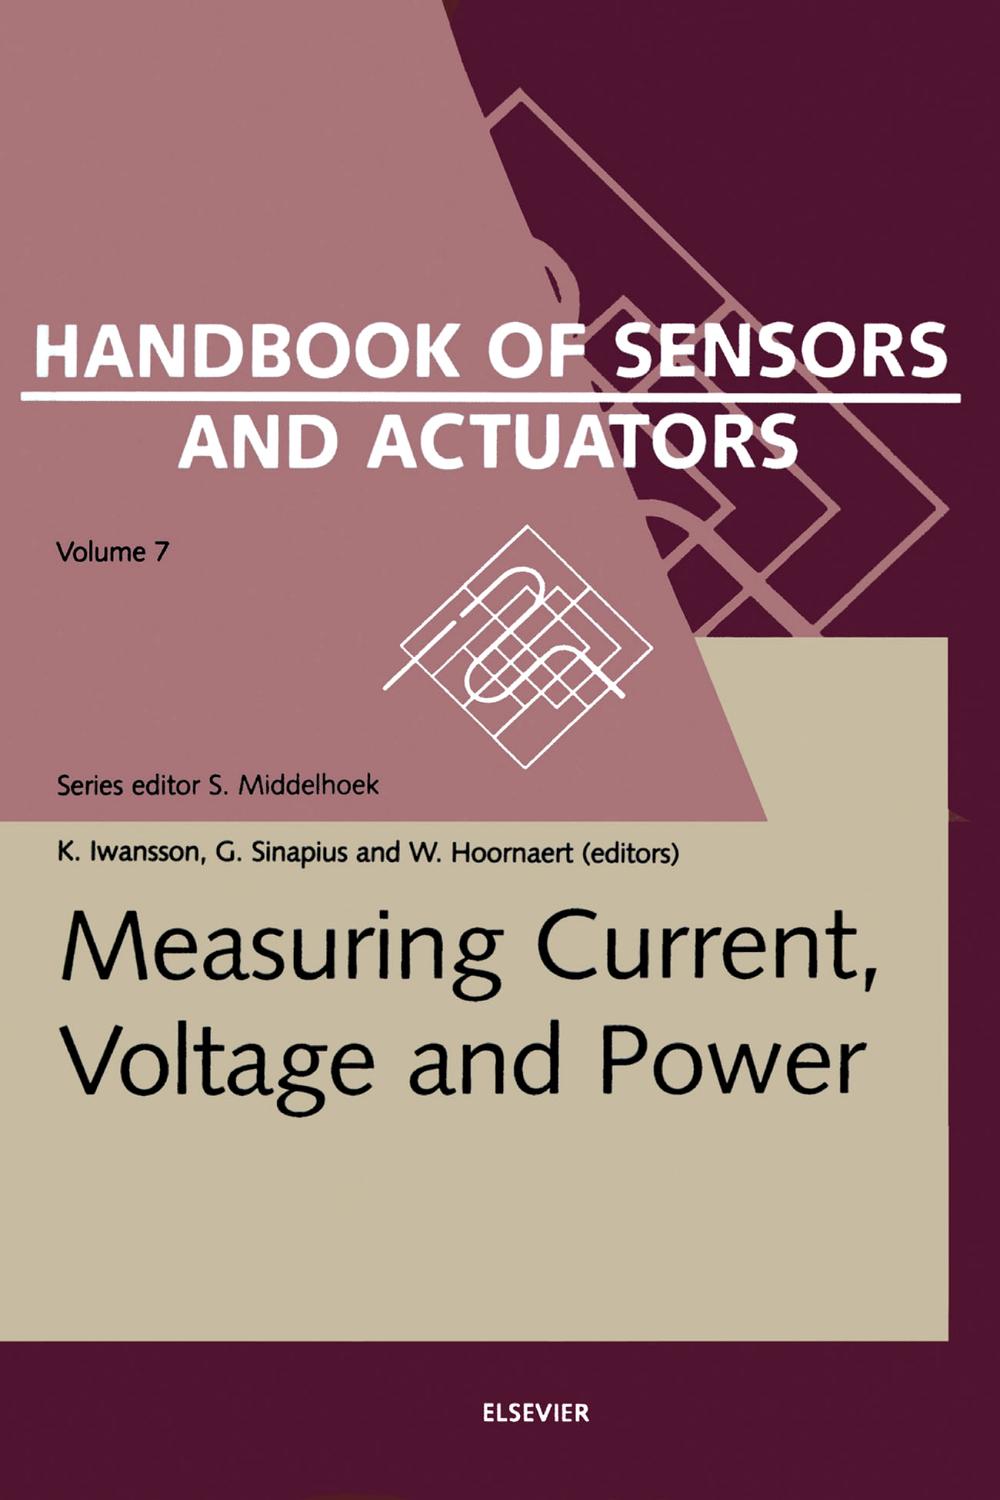 Measuring Current, Voltage and Power - K. Iwansson, G. Sinapius, W. Hoornaert, S. Middelhoek